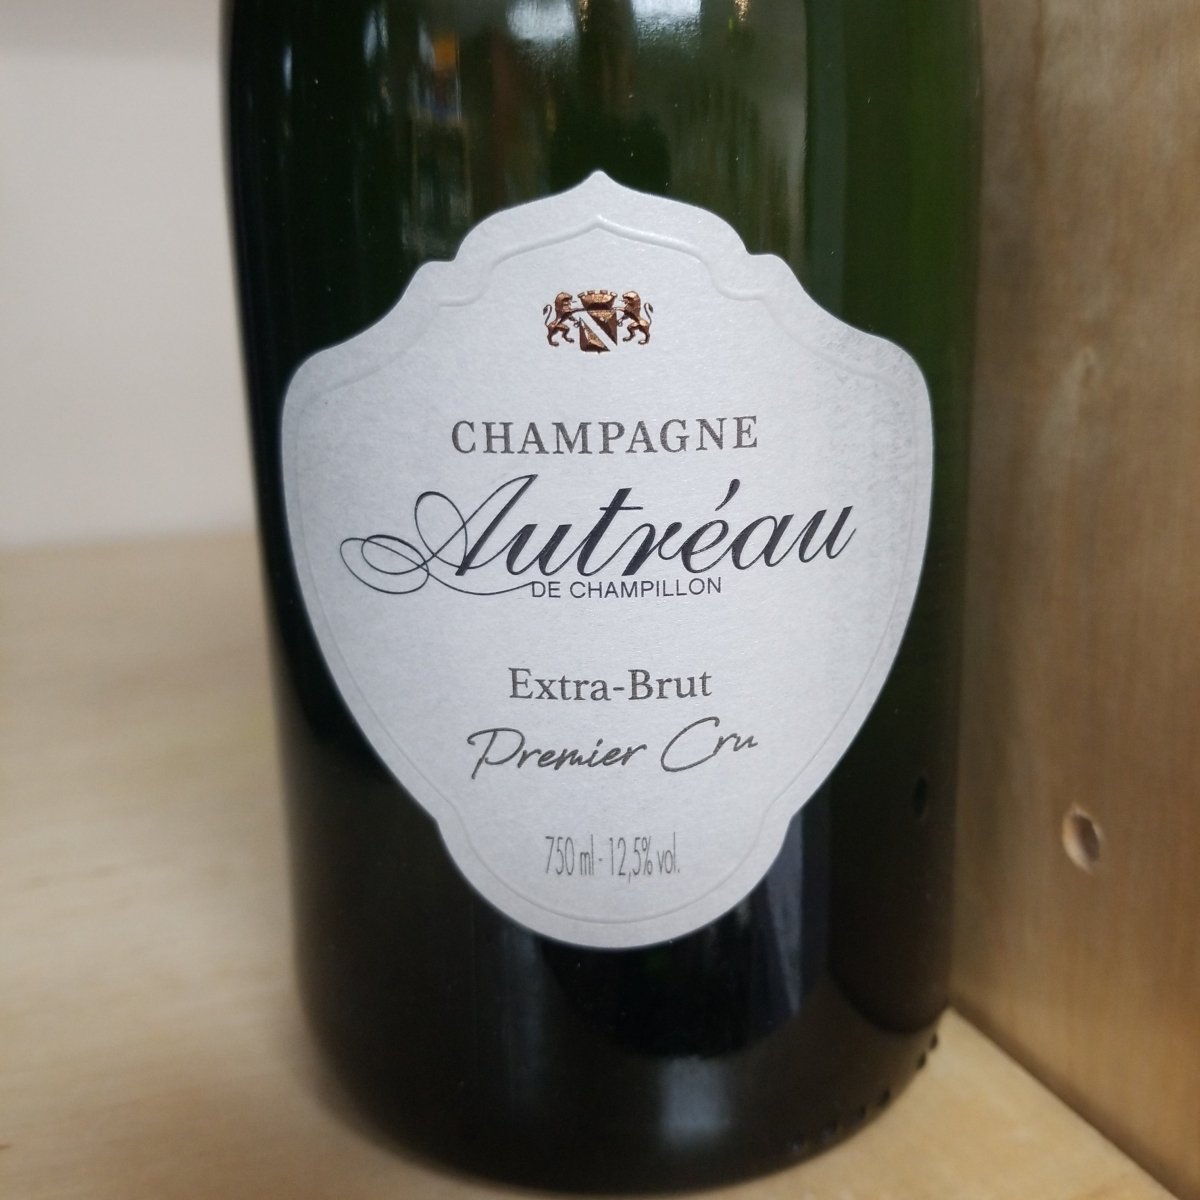 Autreau Extra Brut Premier Cru Champagne 750ml (Better than Moet) - Sip & Say